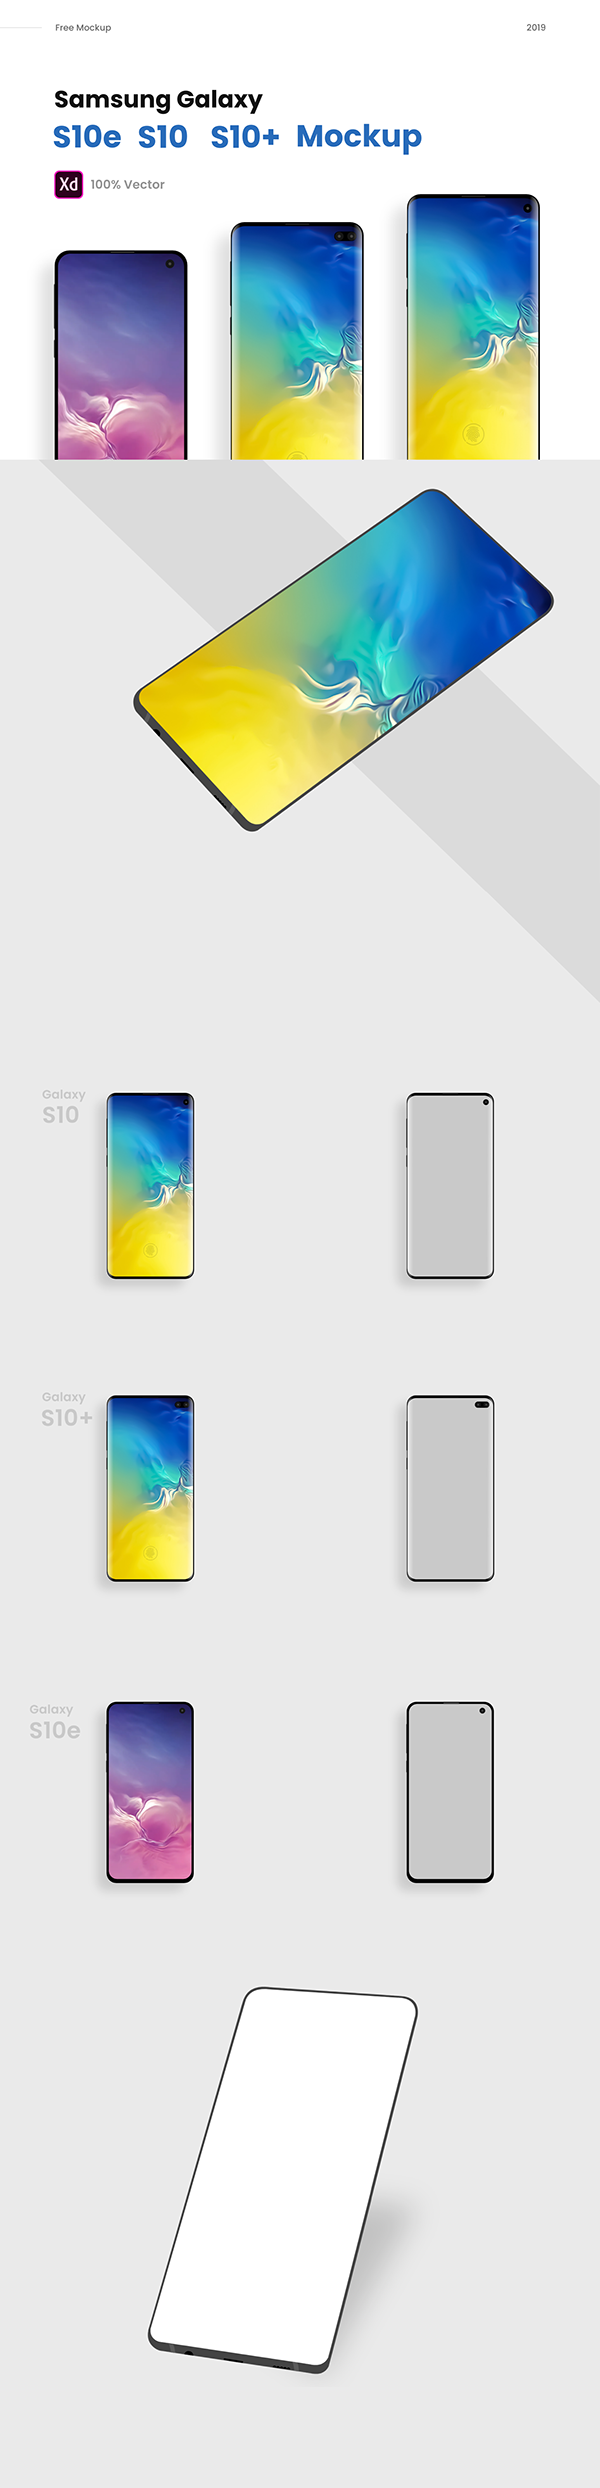 Samsung Galaxy S10e, S10, S10+ Mockup -Freebie